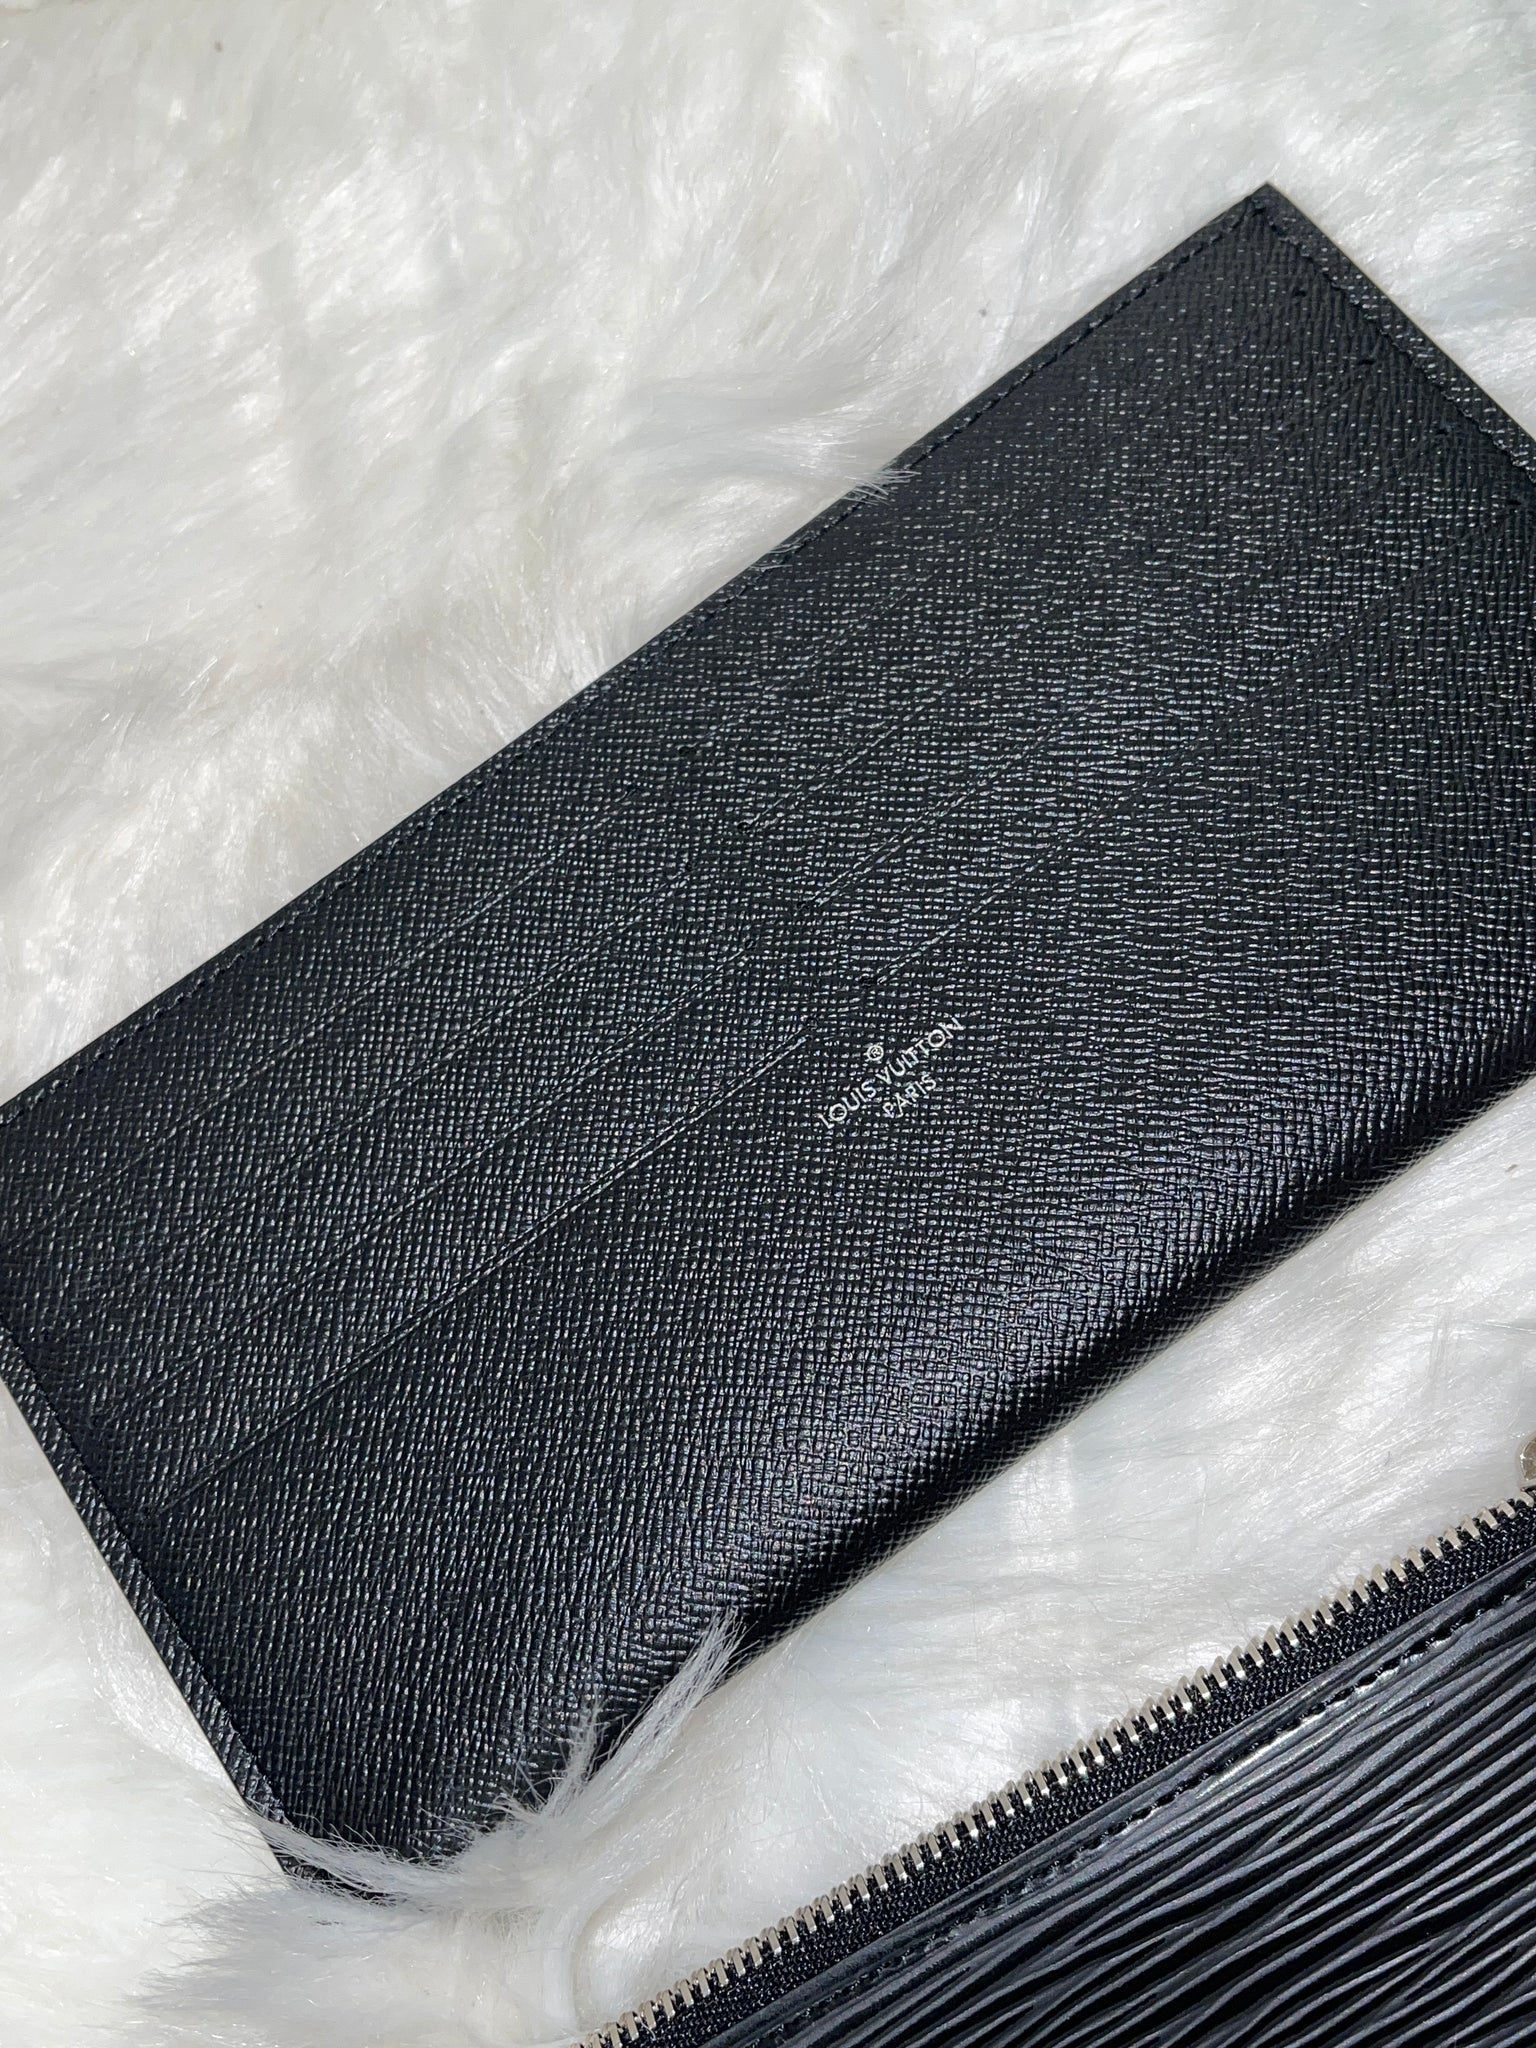 Louis Vuitton Felicie Pochette Epi Leather Black 2298591